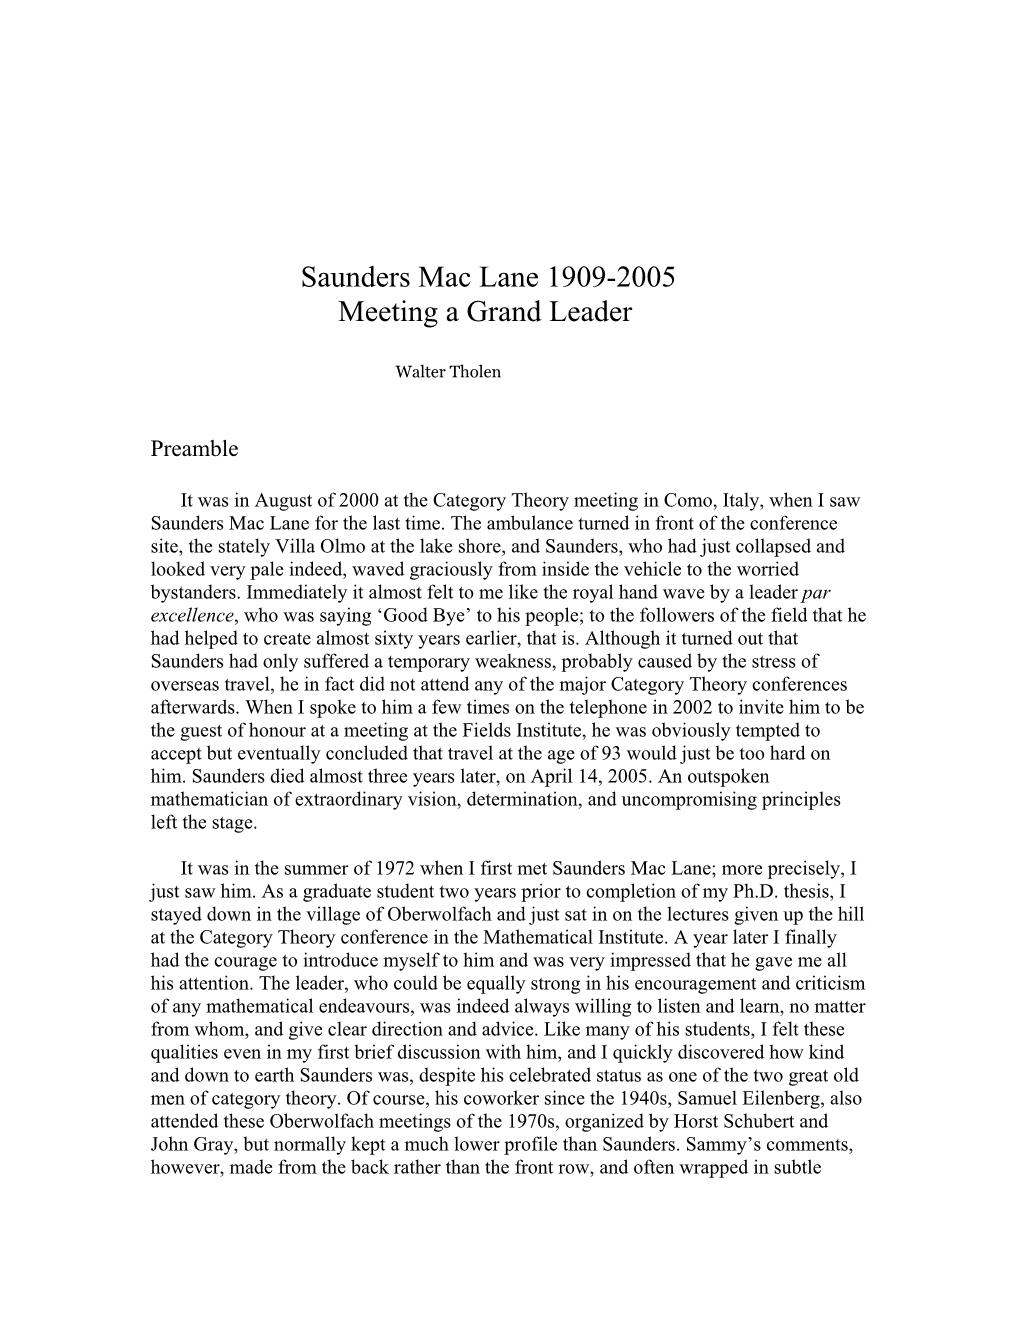 Saunders Mac Lane 1909-2005 Meeting a Grand Leader